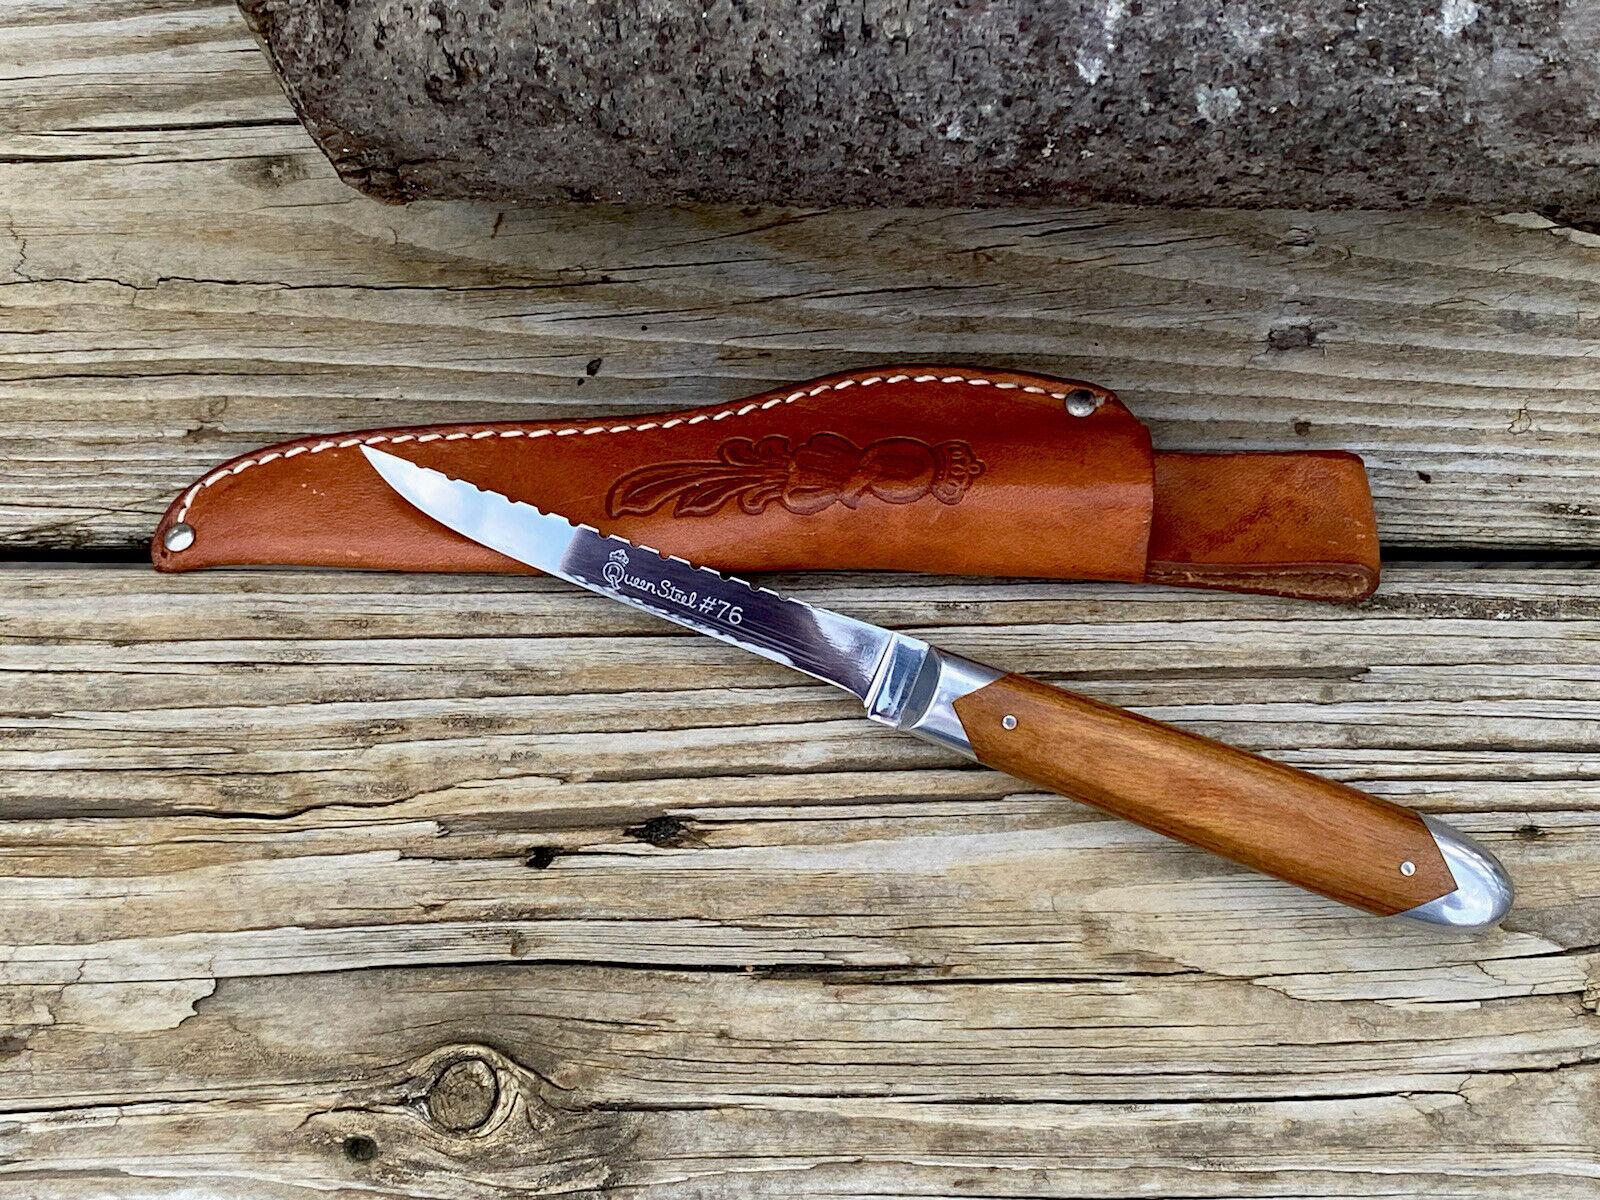 VINTAGE FIXED BLADE KNIFE-QUEEN STEEL #76 FISHING KNIFE-ORIGINAL